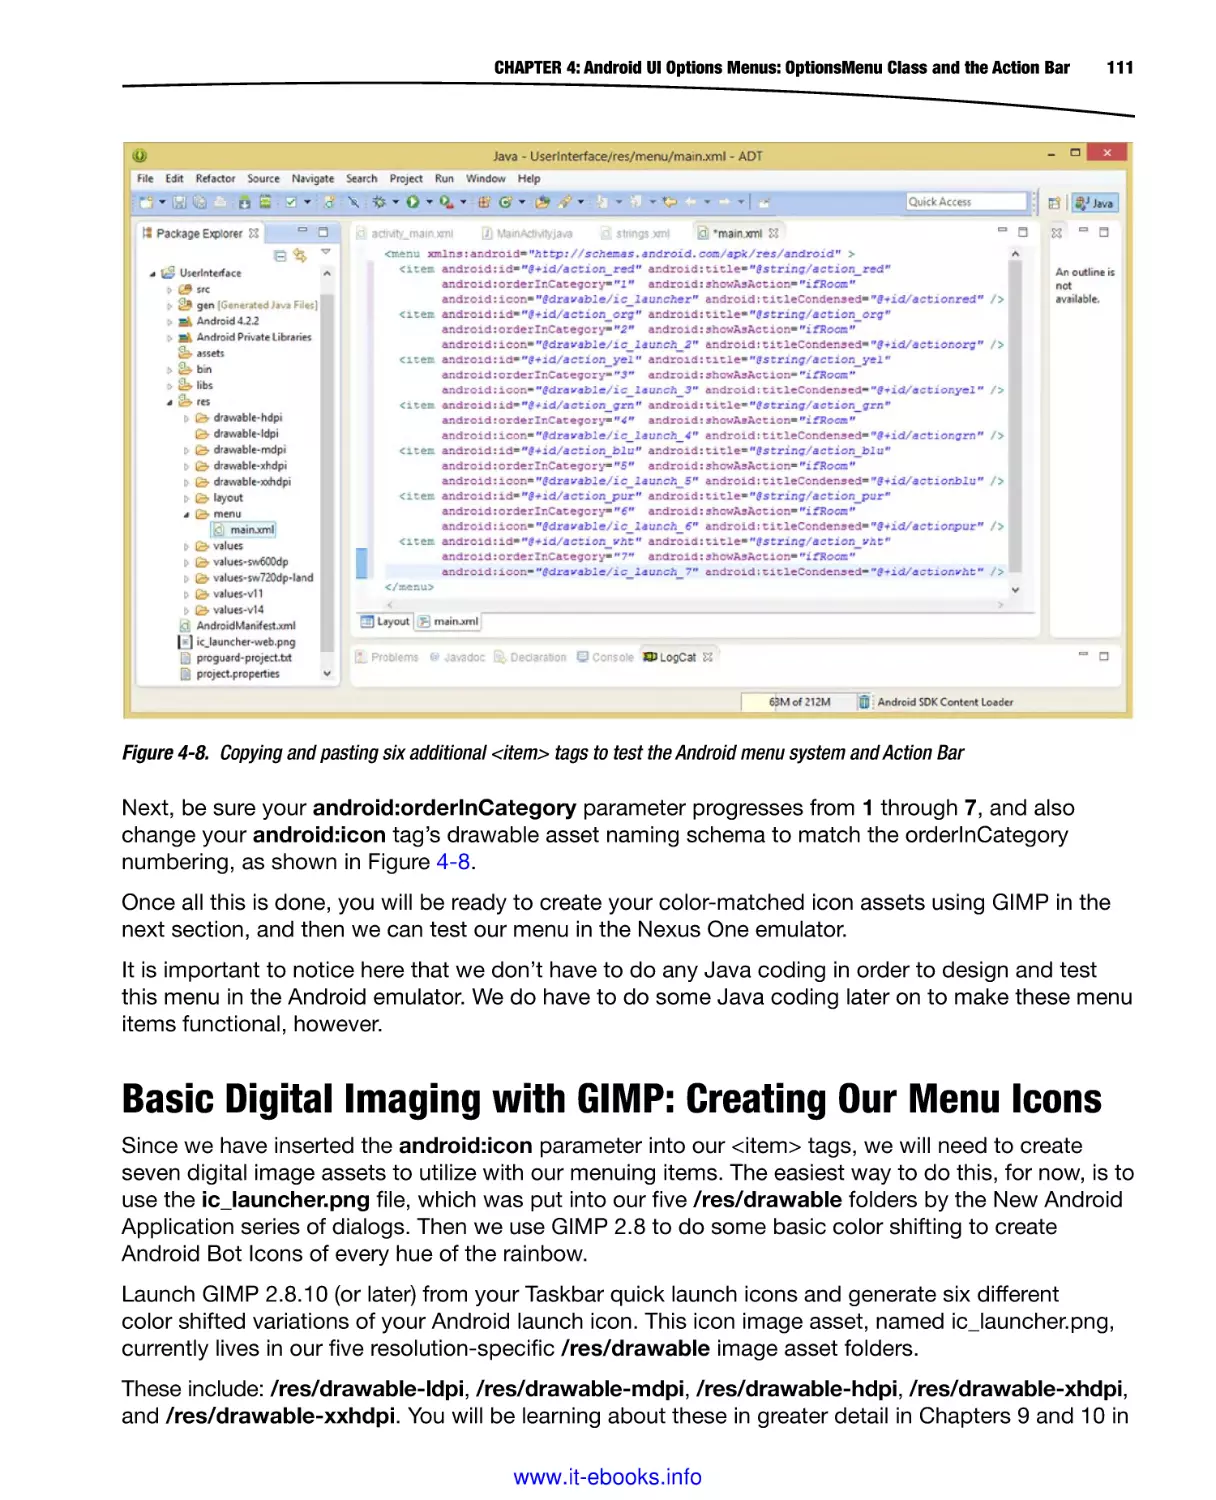 Basic Digital Imaging with GIMP